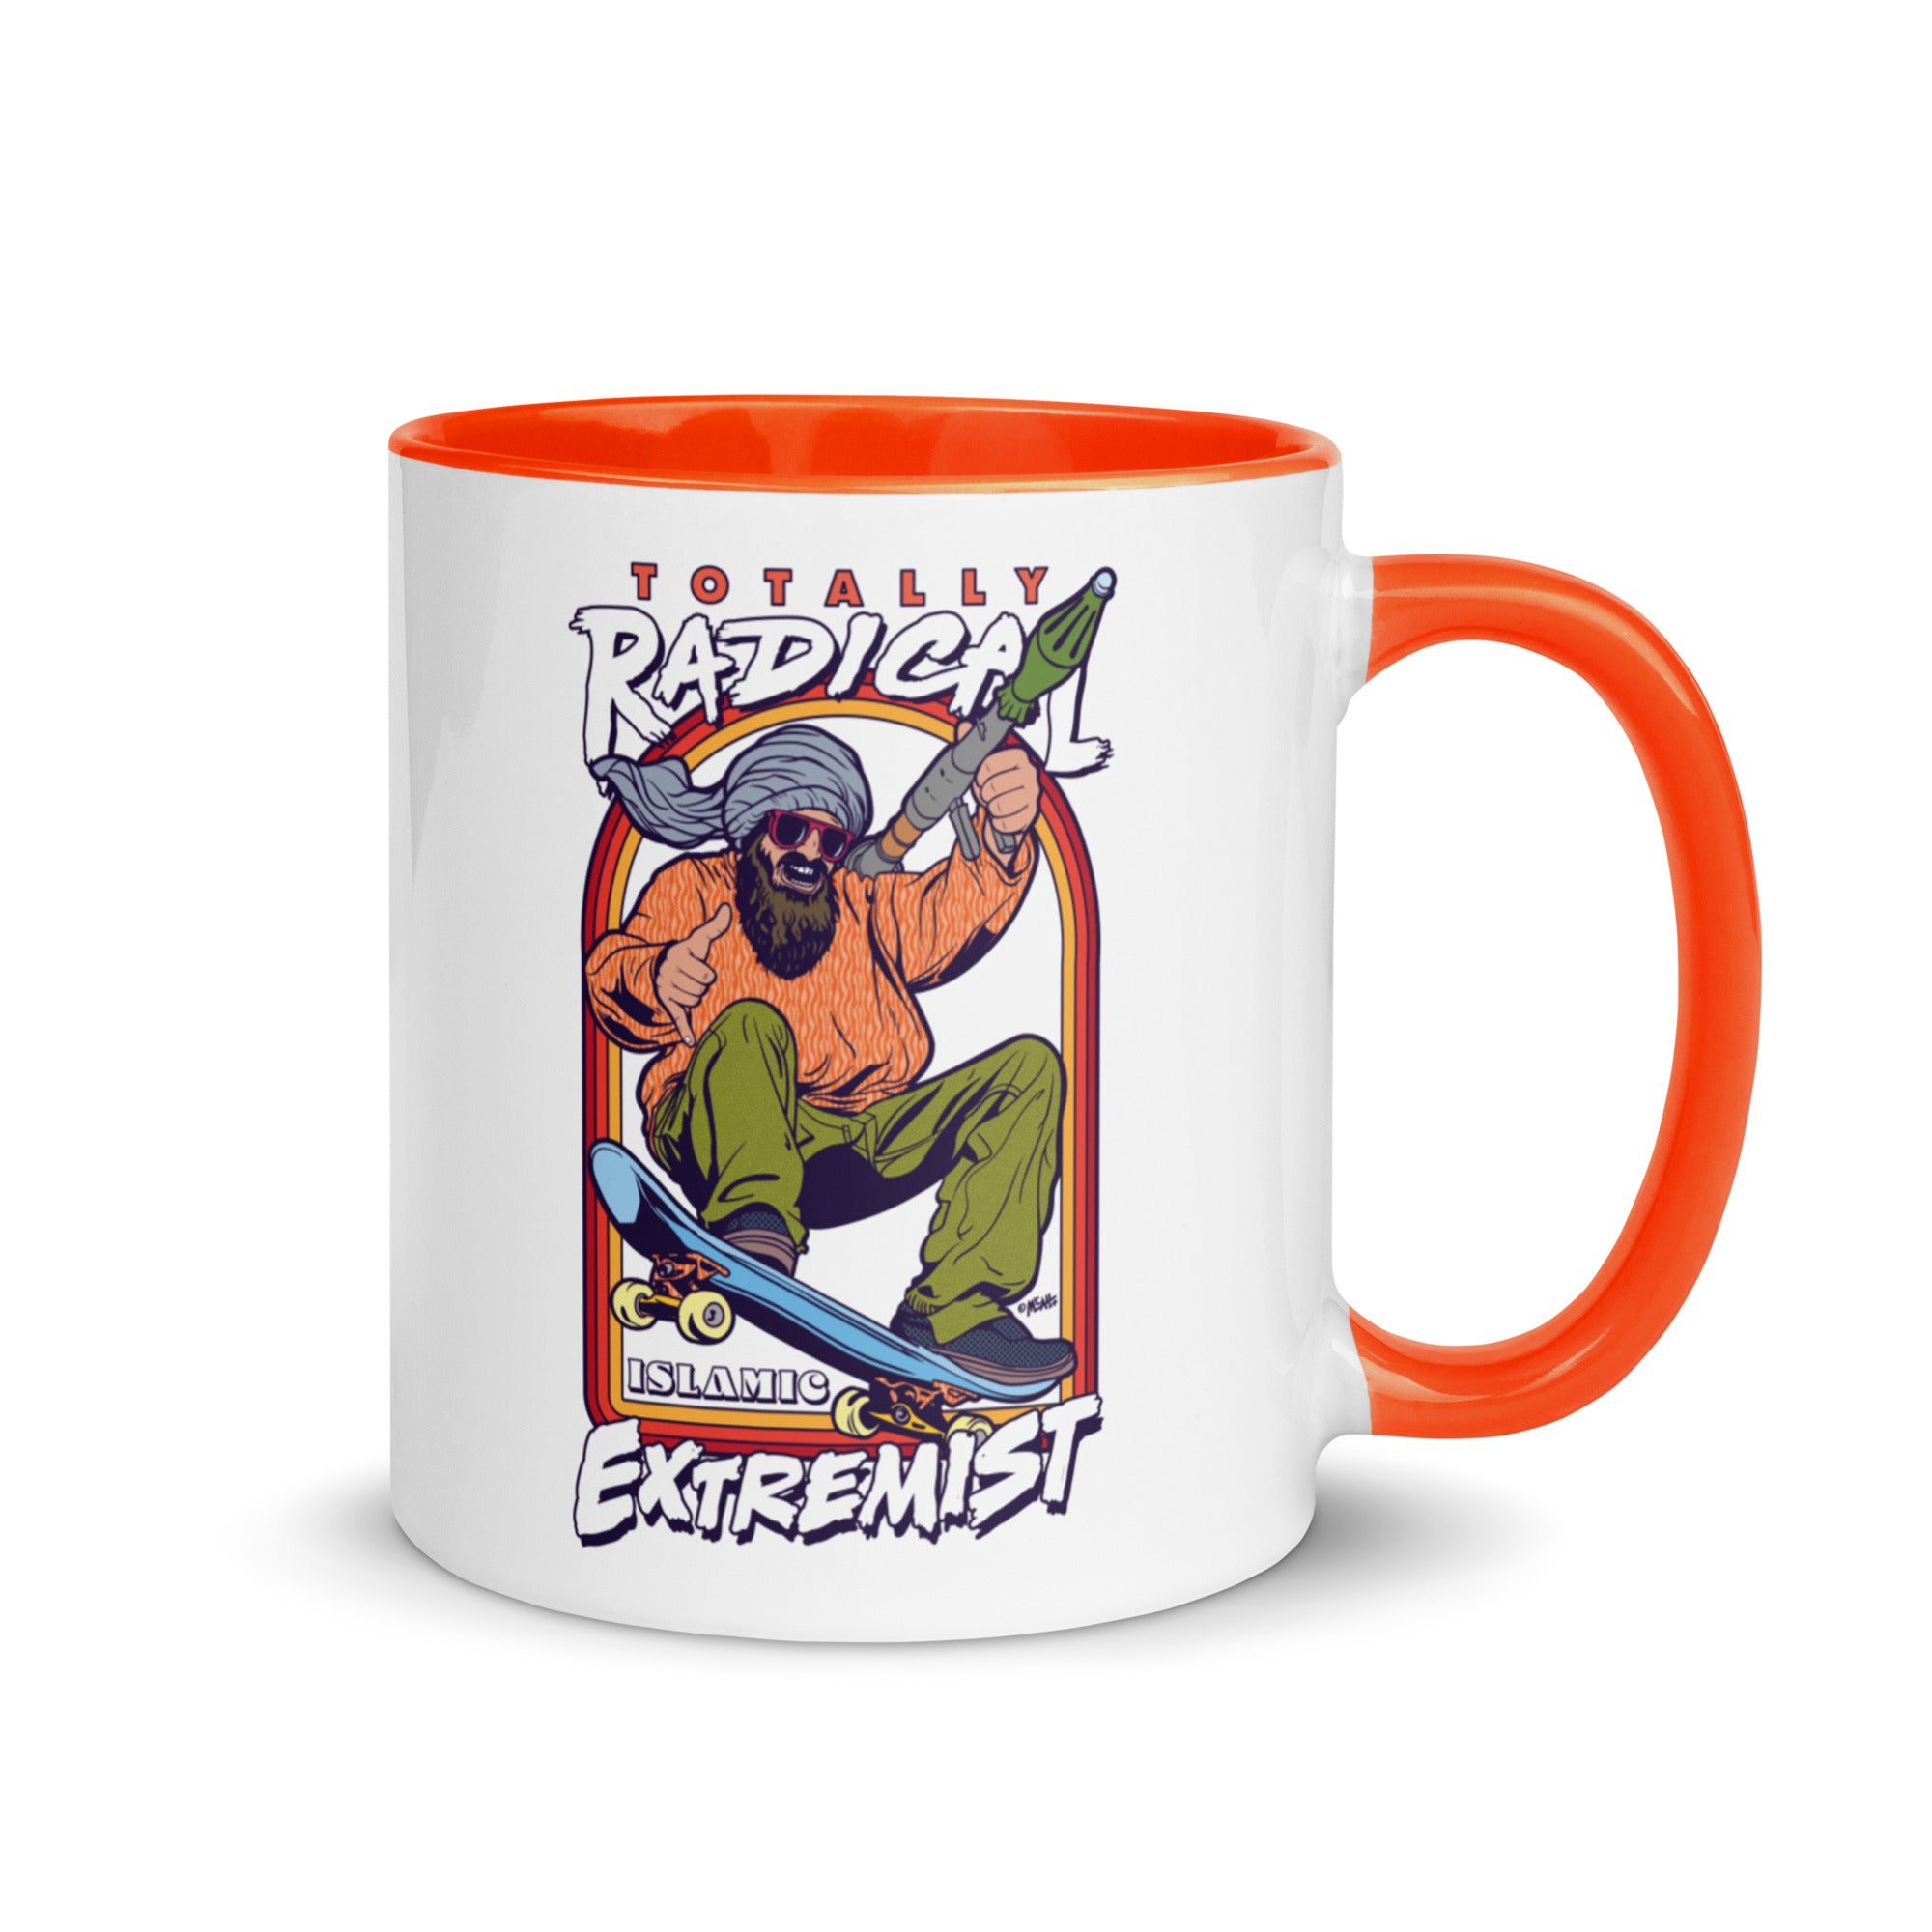 Totally Radical Islamic Extremist Coffee Mug